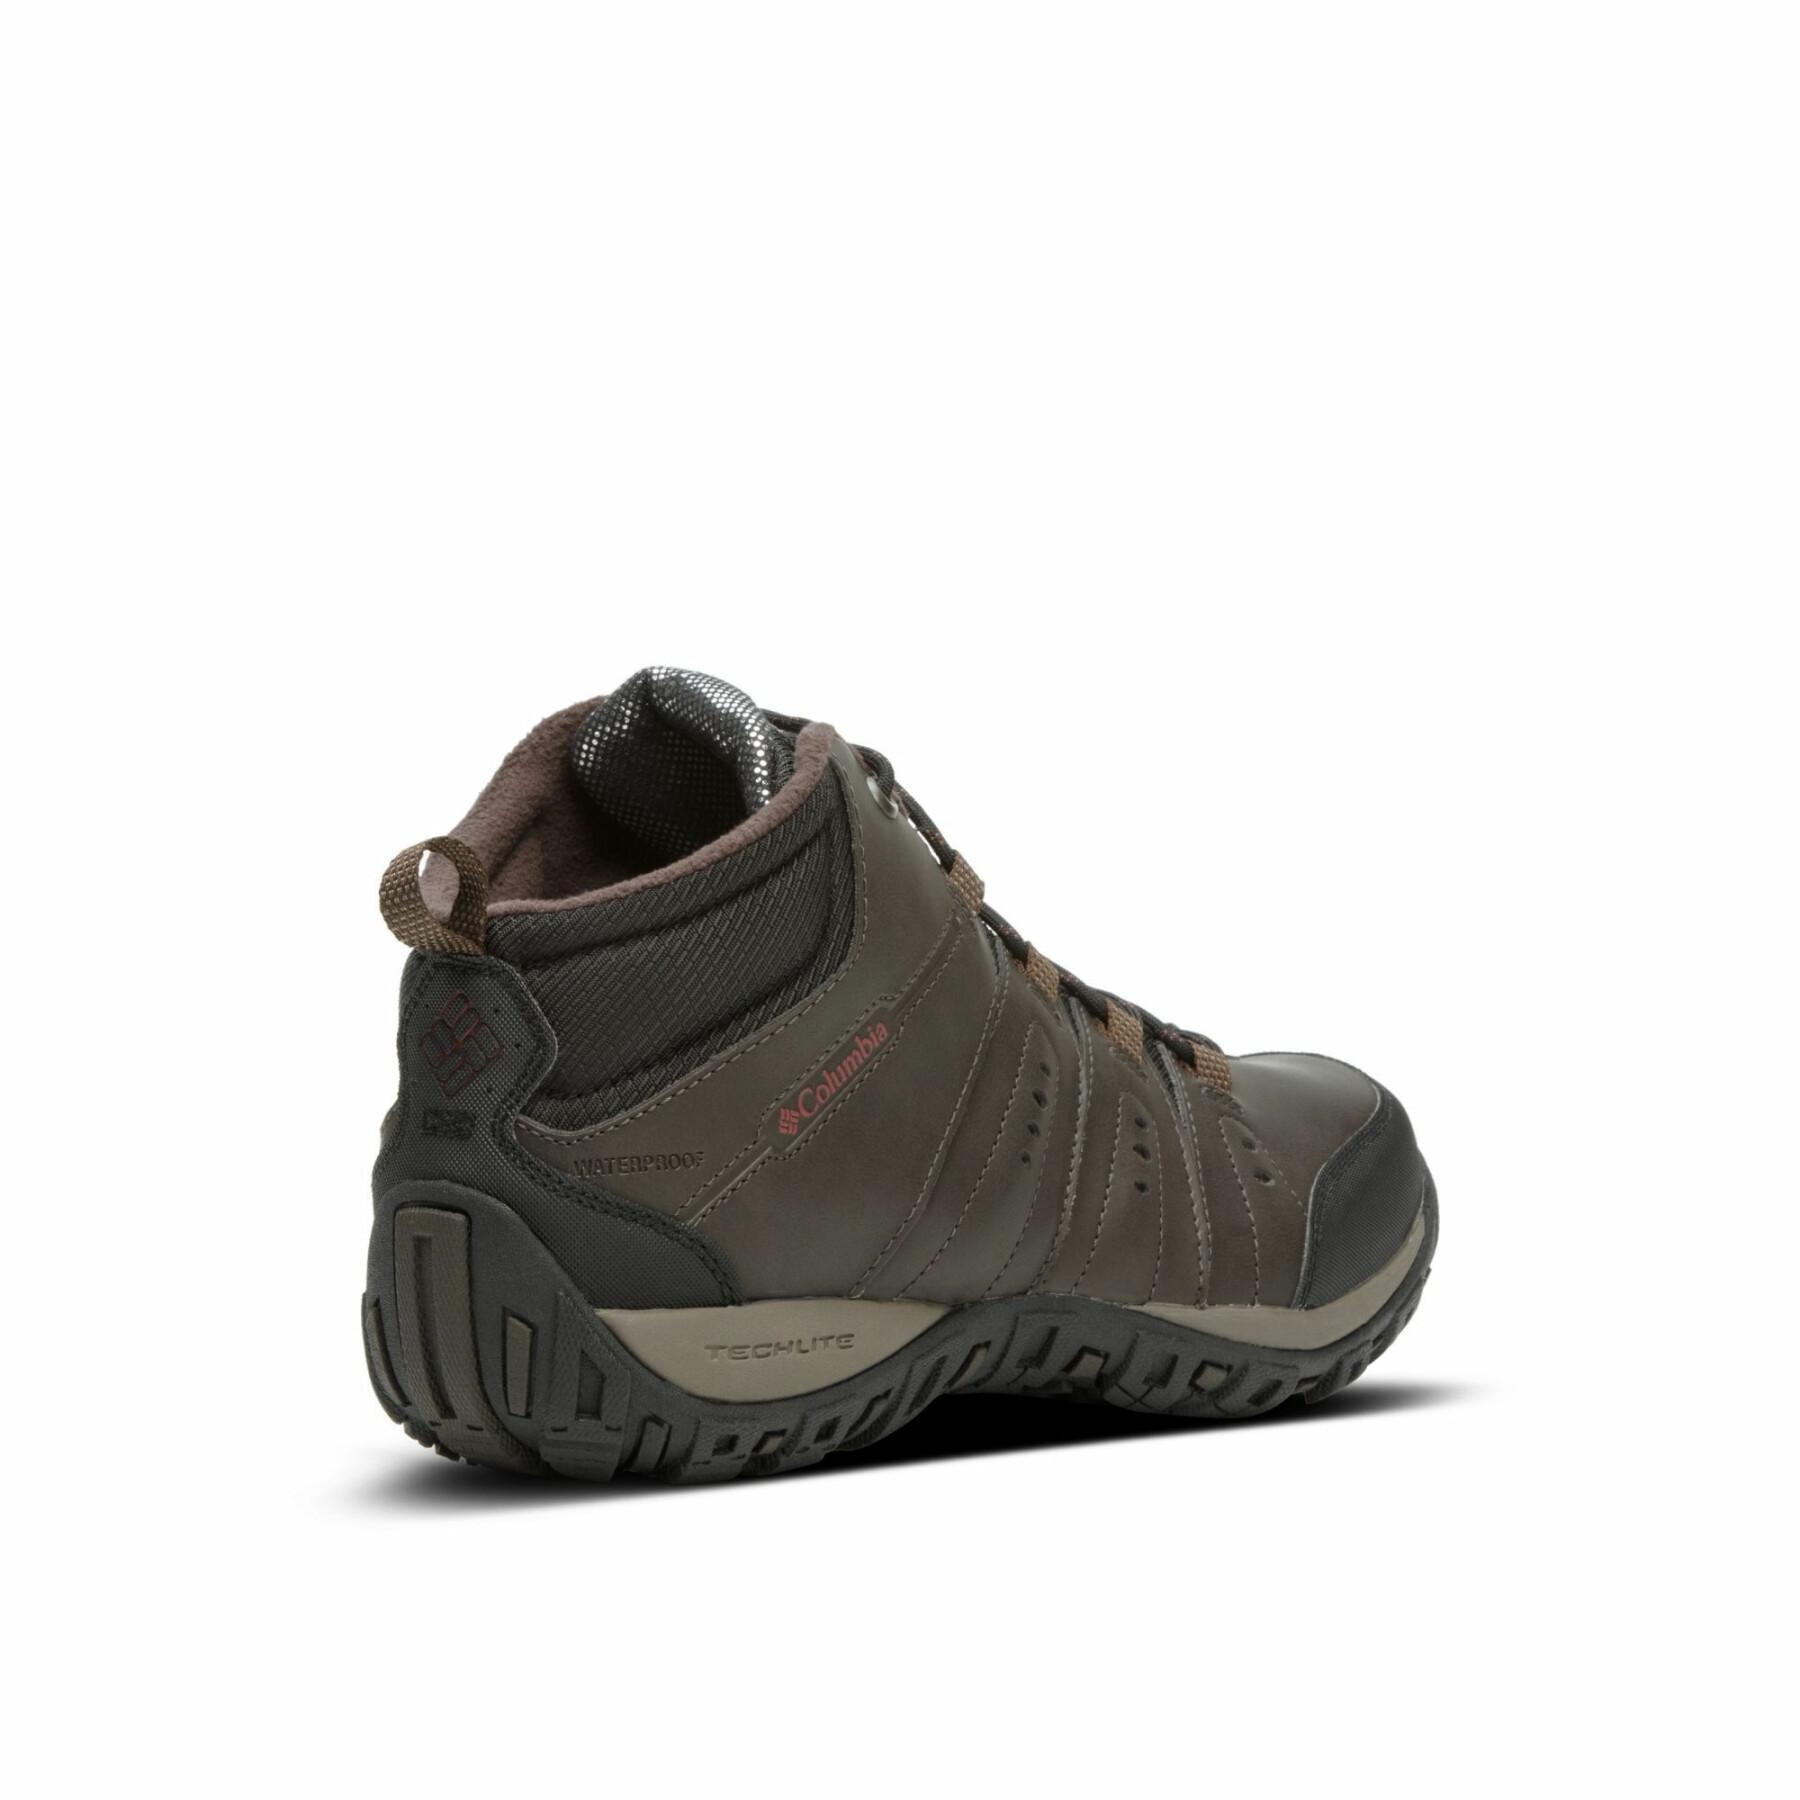 Hiking shoes Columbia Woodburn II Chukka waterproof Omni-Heat